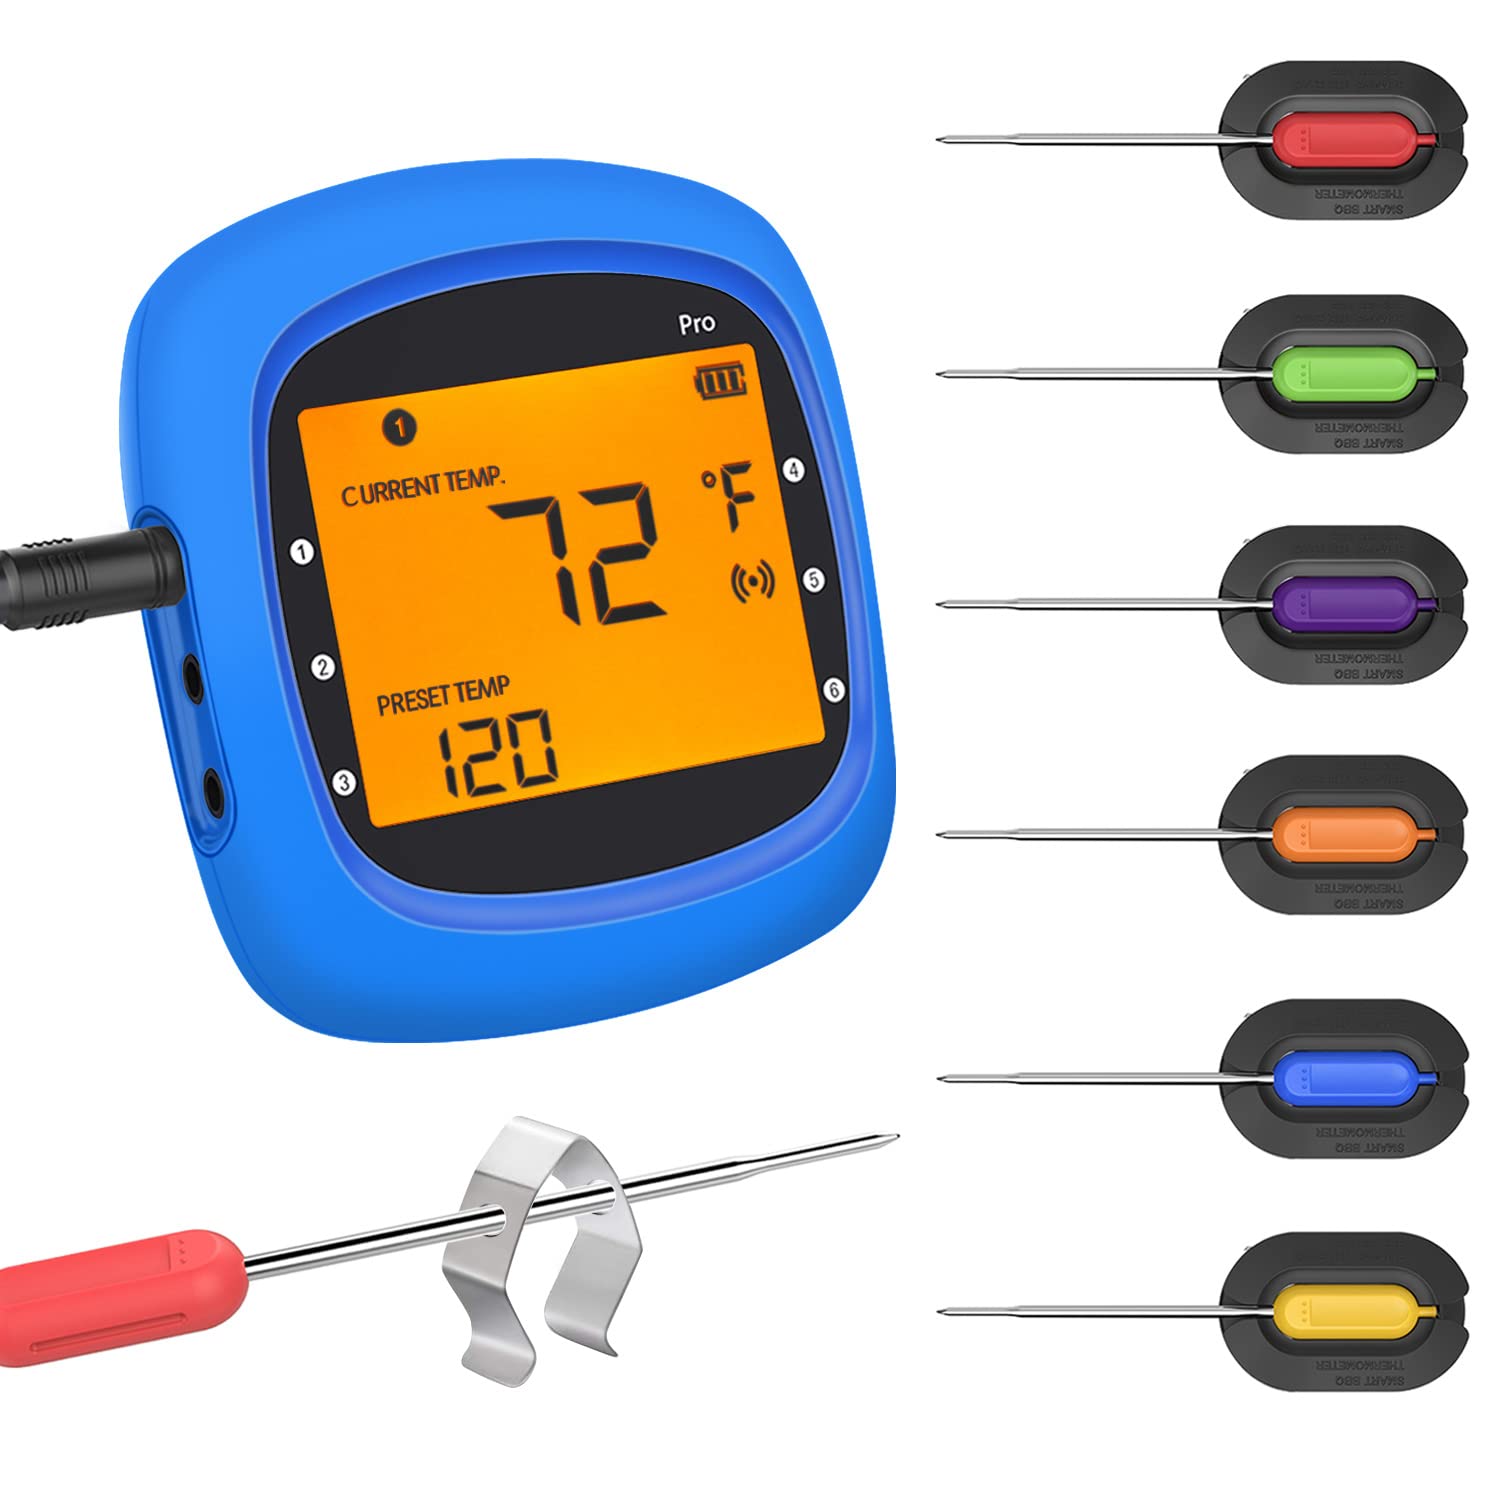 Soraken Bluetooth Meat Thermometer